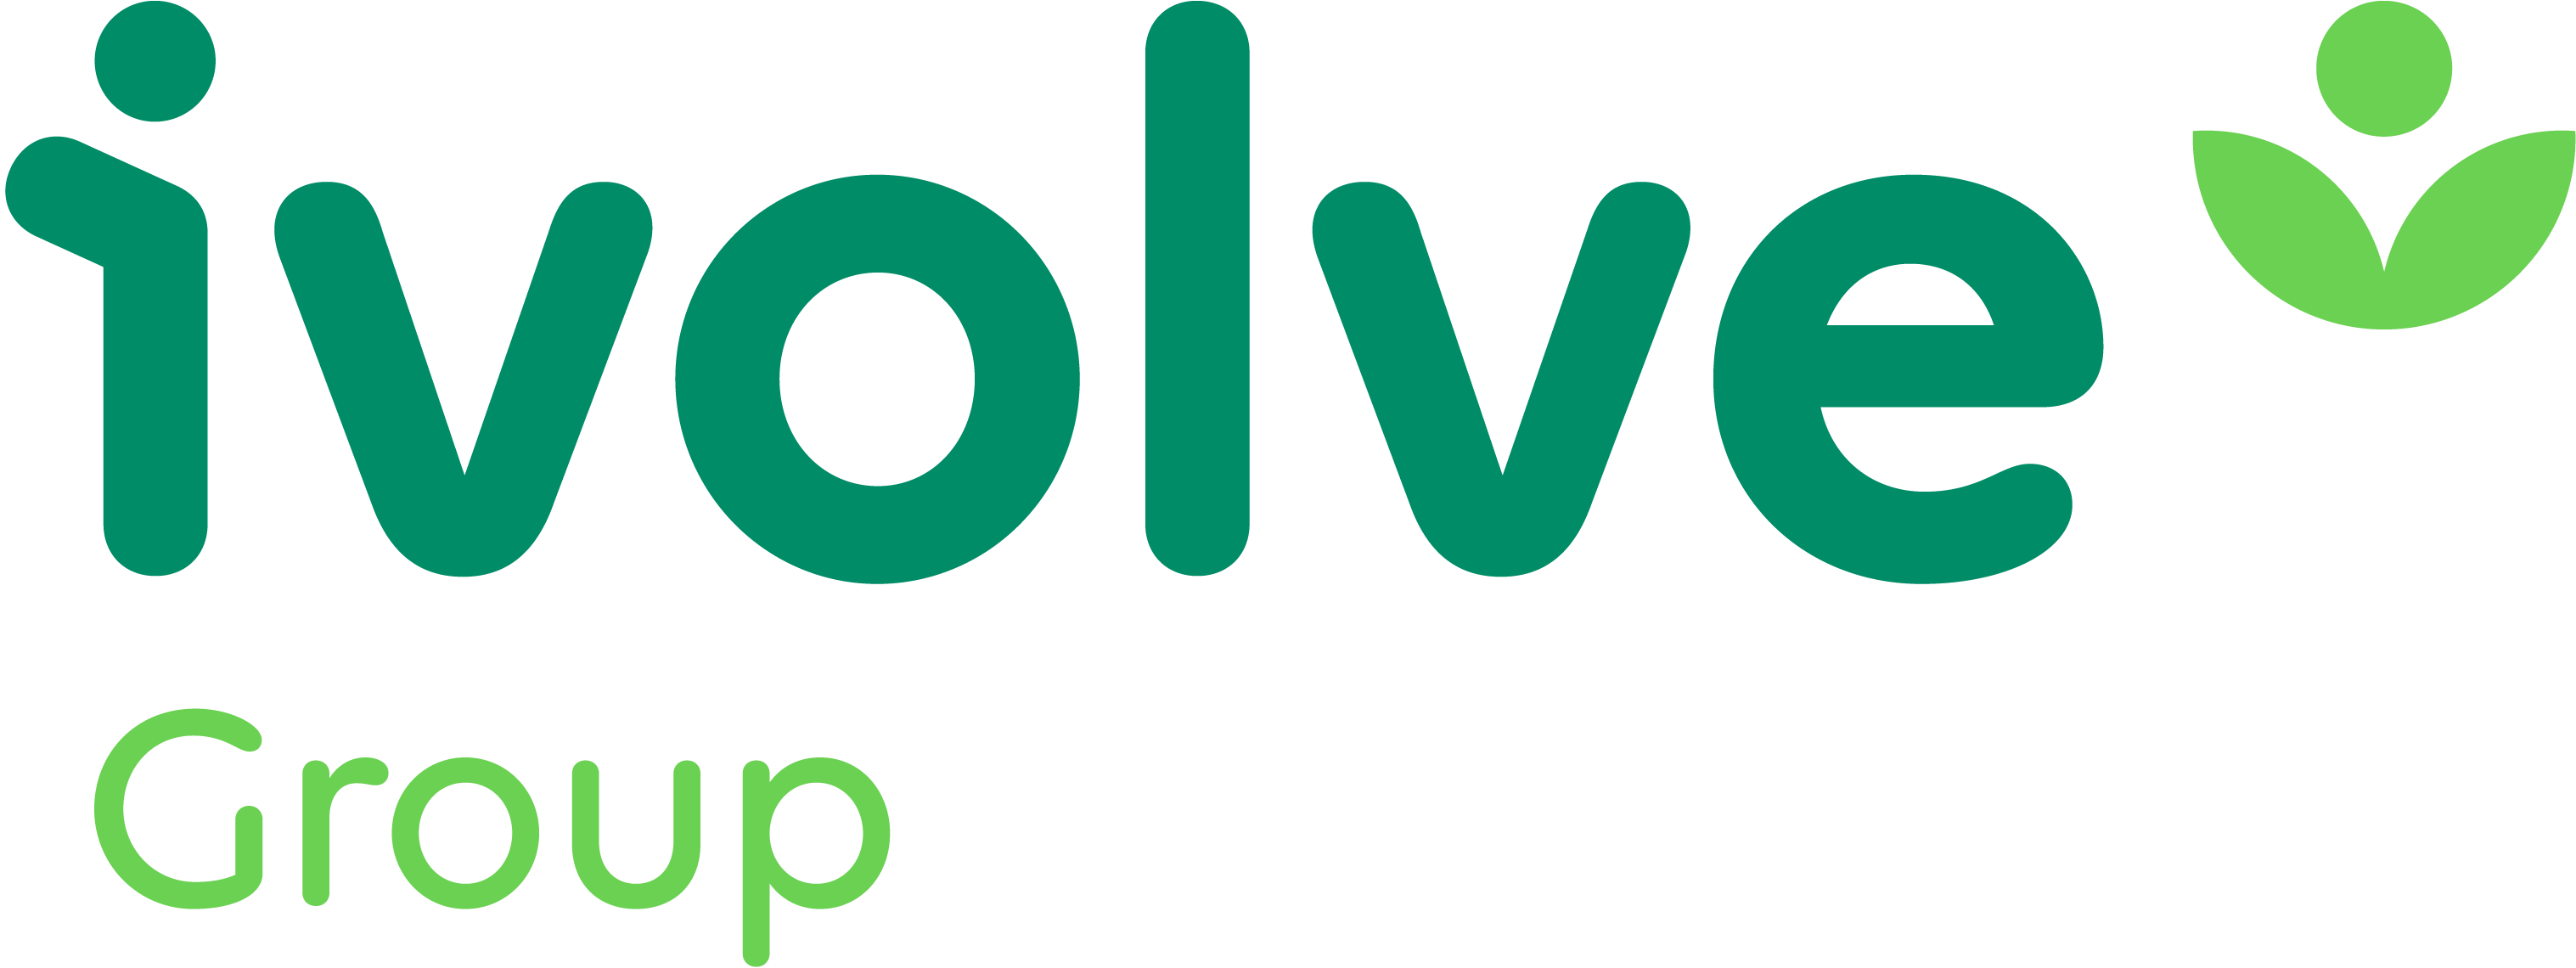 Ivolve Group